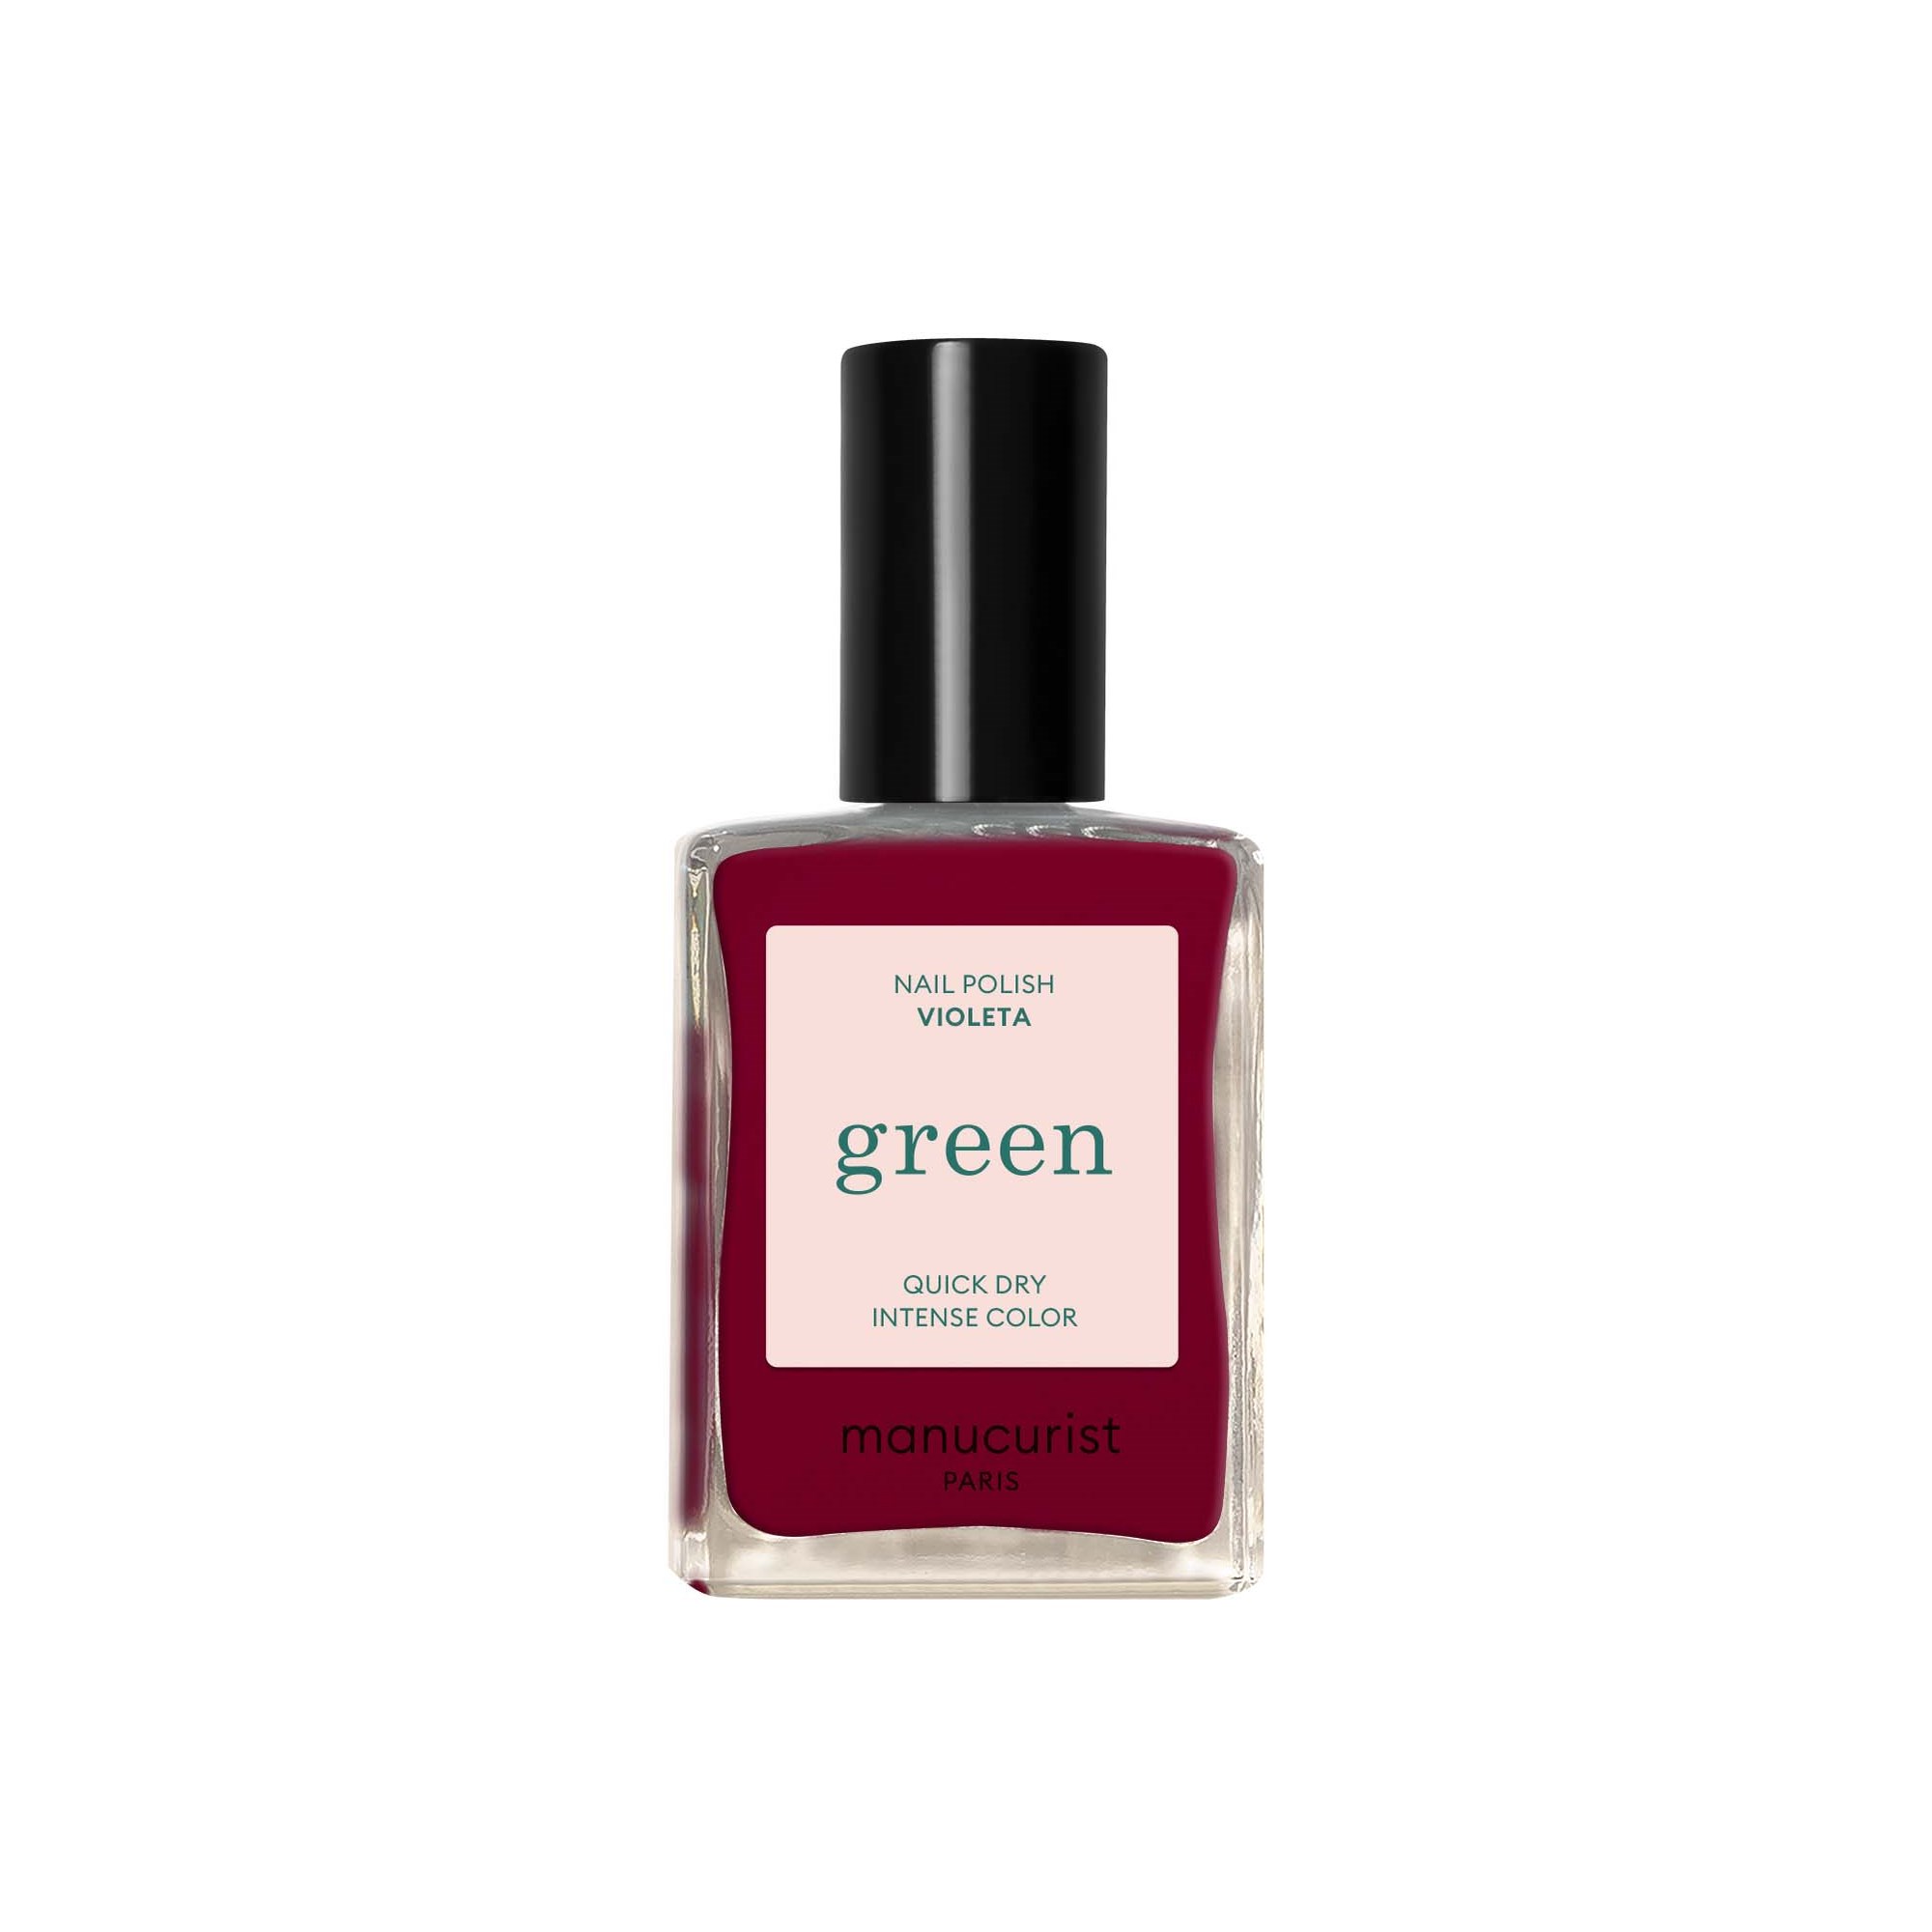 Läs mer om Manucurist Green Nail Polish Violeta